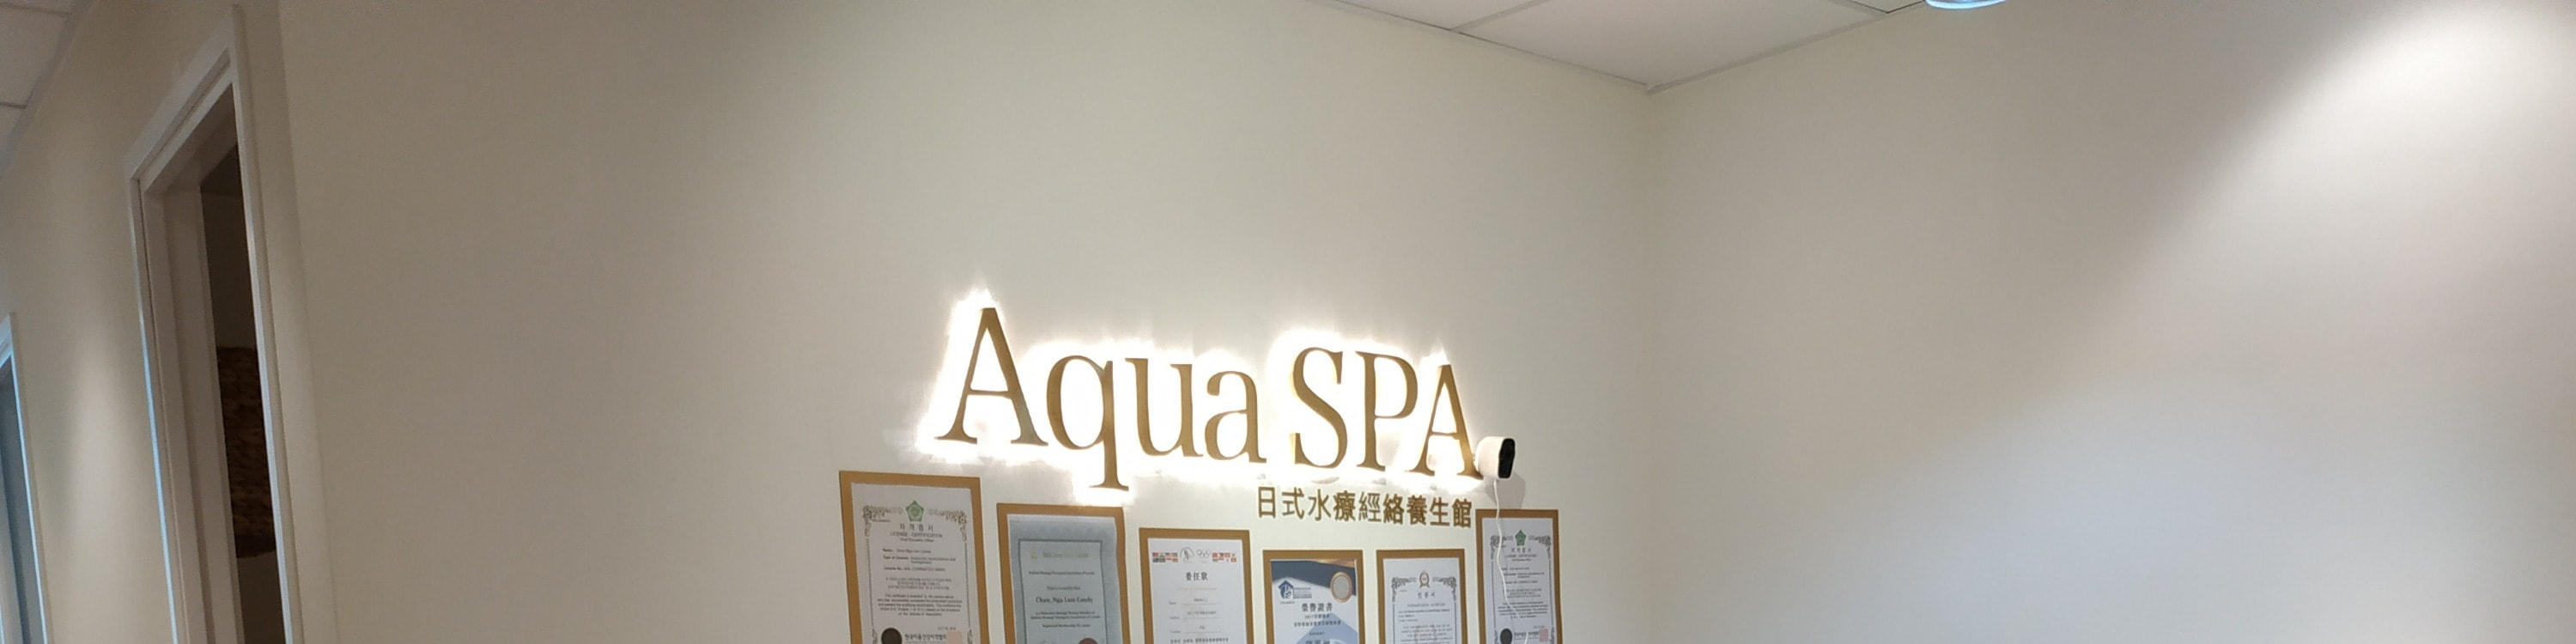 AQUA Pro Beauty 養生美 - 美容養生水療專門店 | 尖沙咀 | 又一城 | 元朗